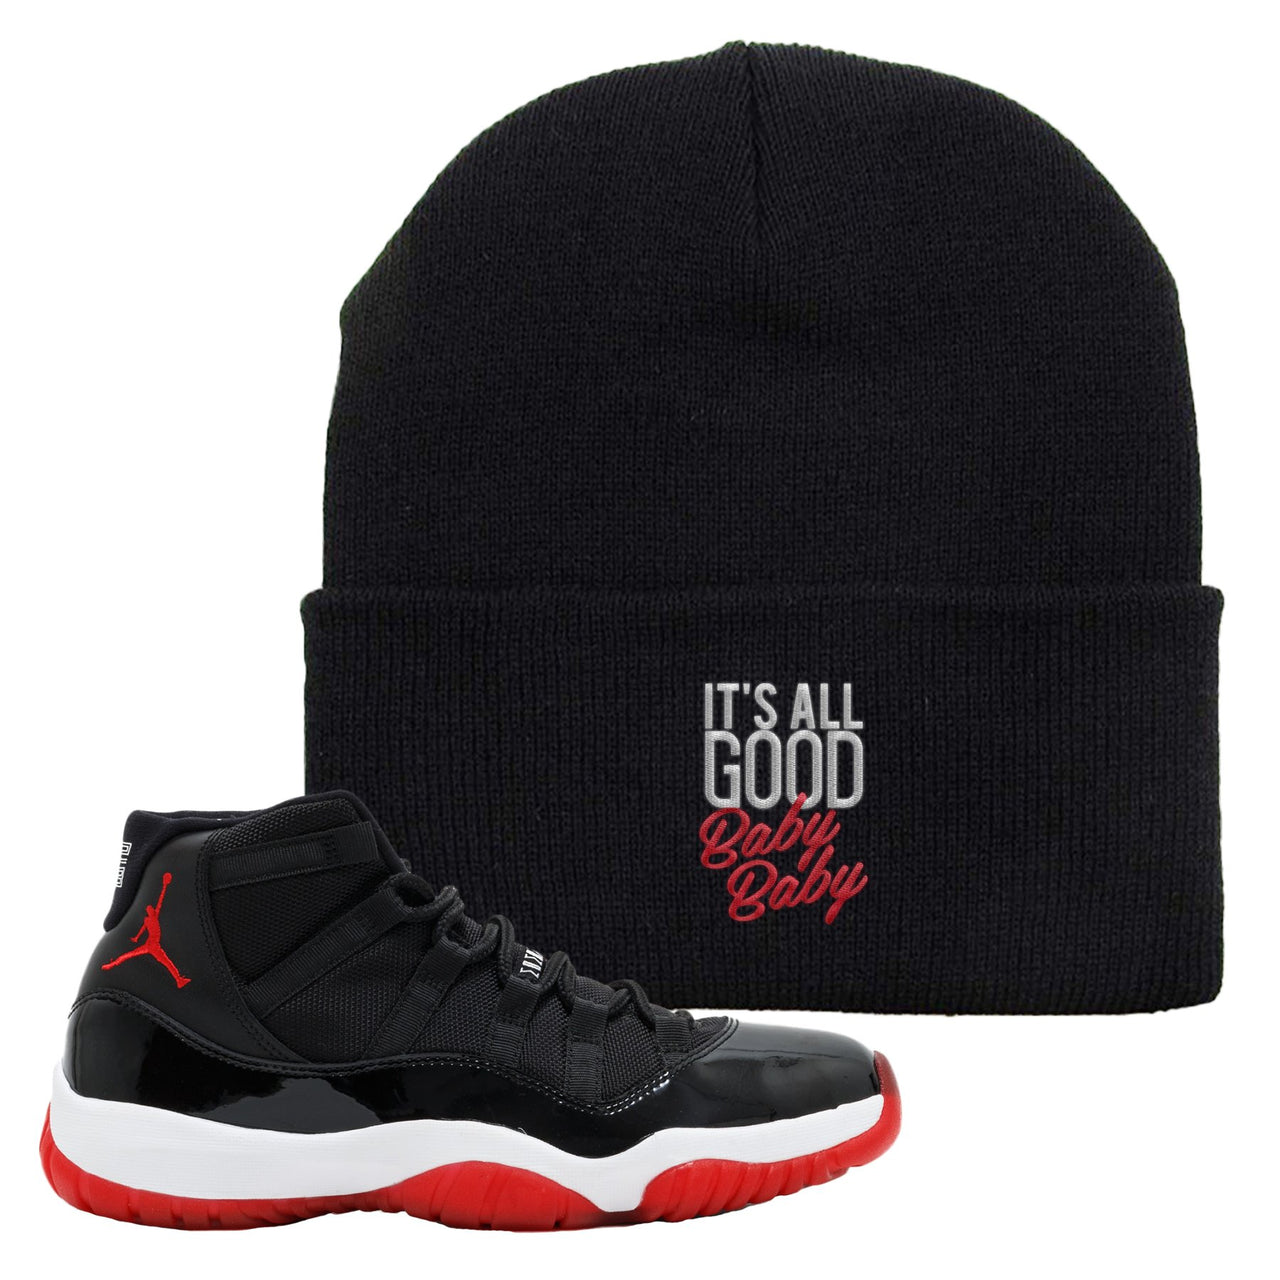 Jordan 11 Bred It's All Good Baby Baby Black Sneaker Hook Up Beanie